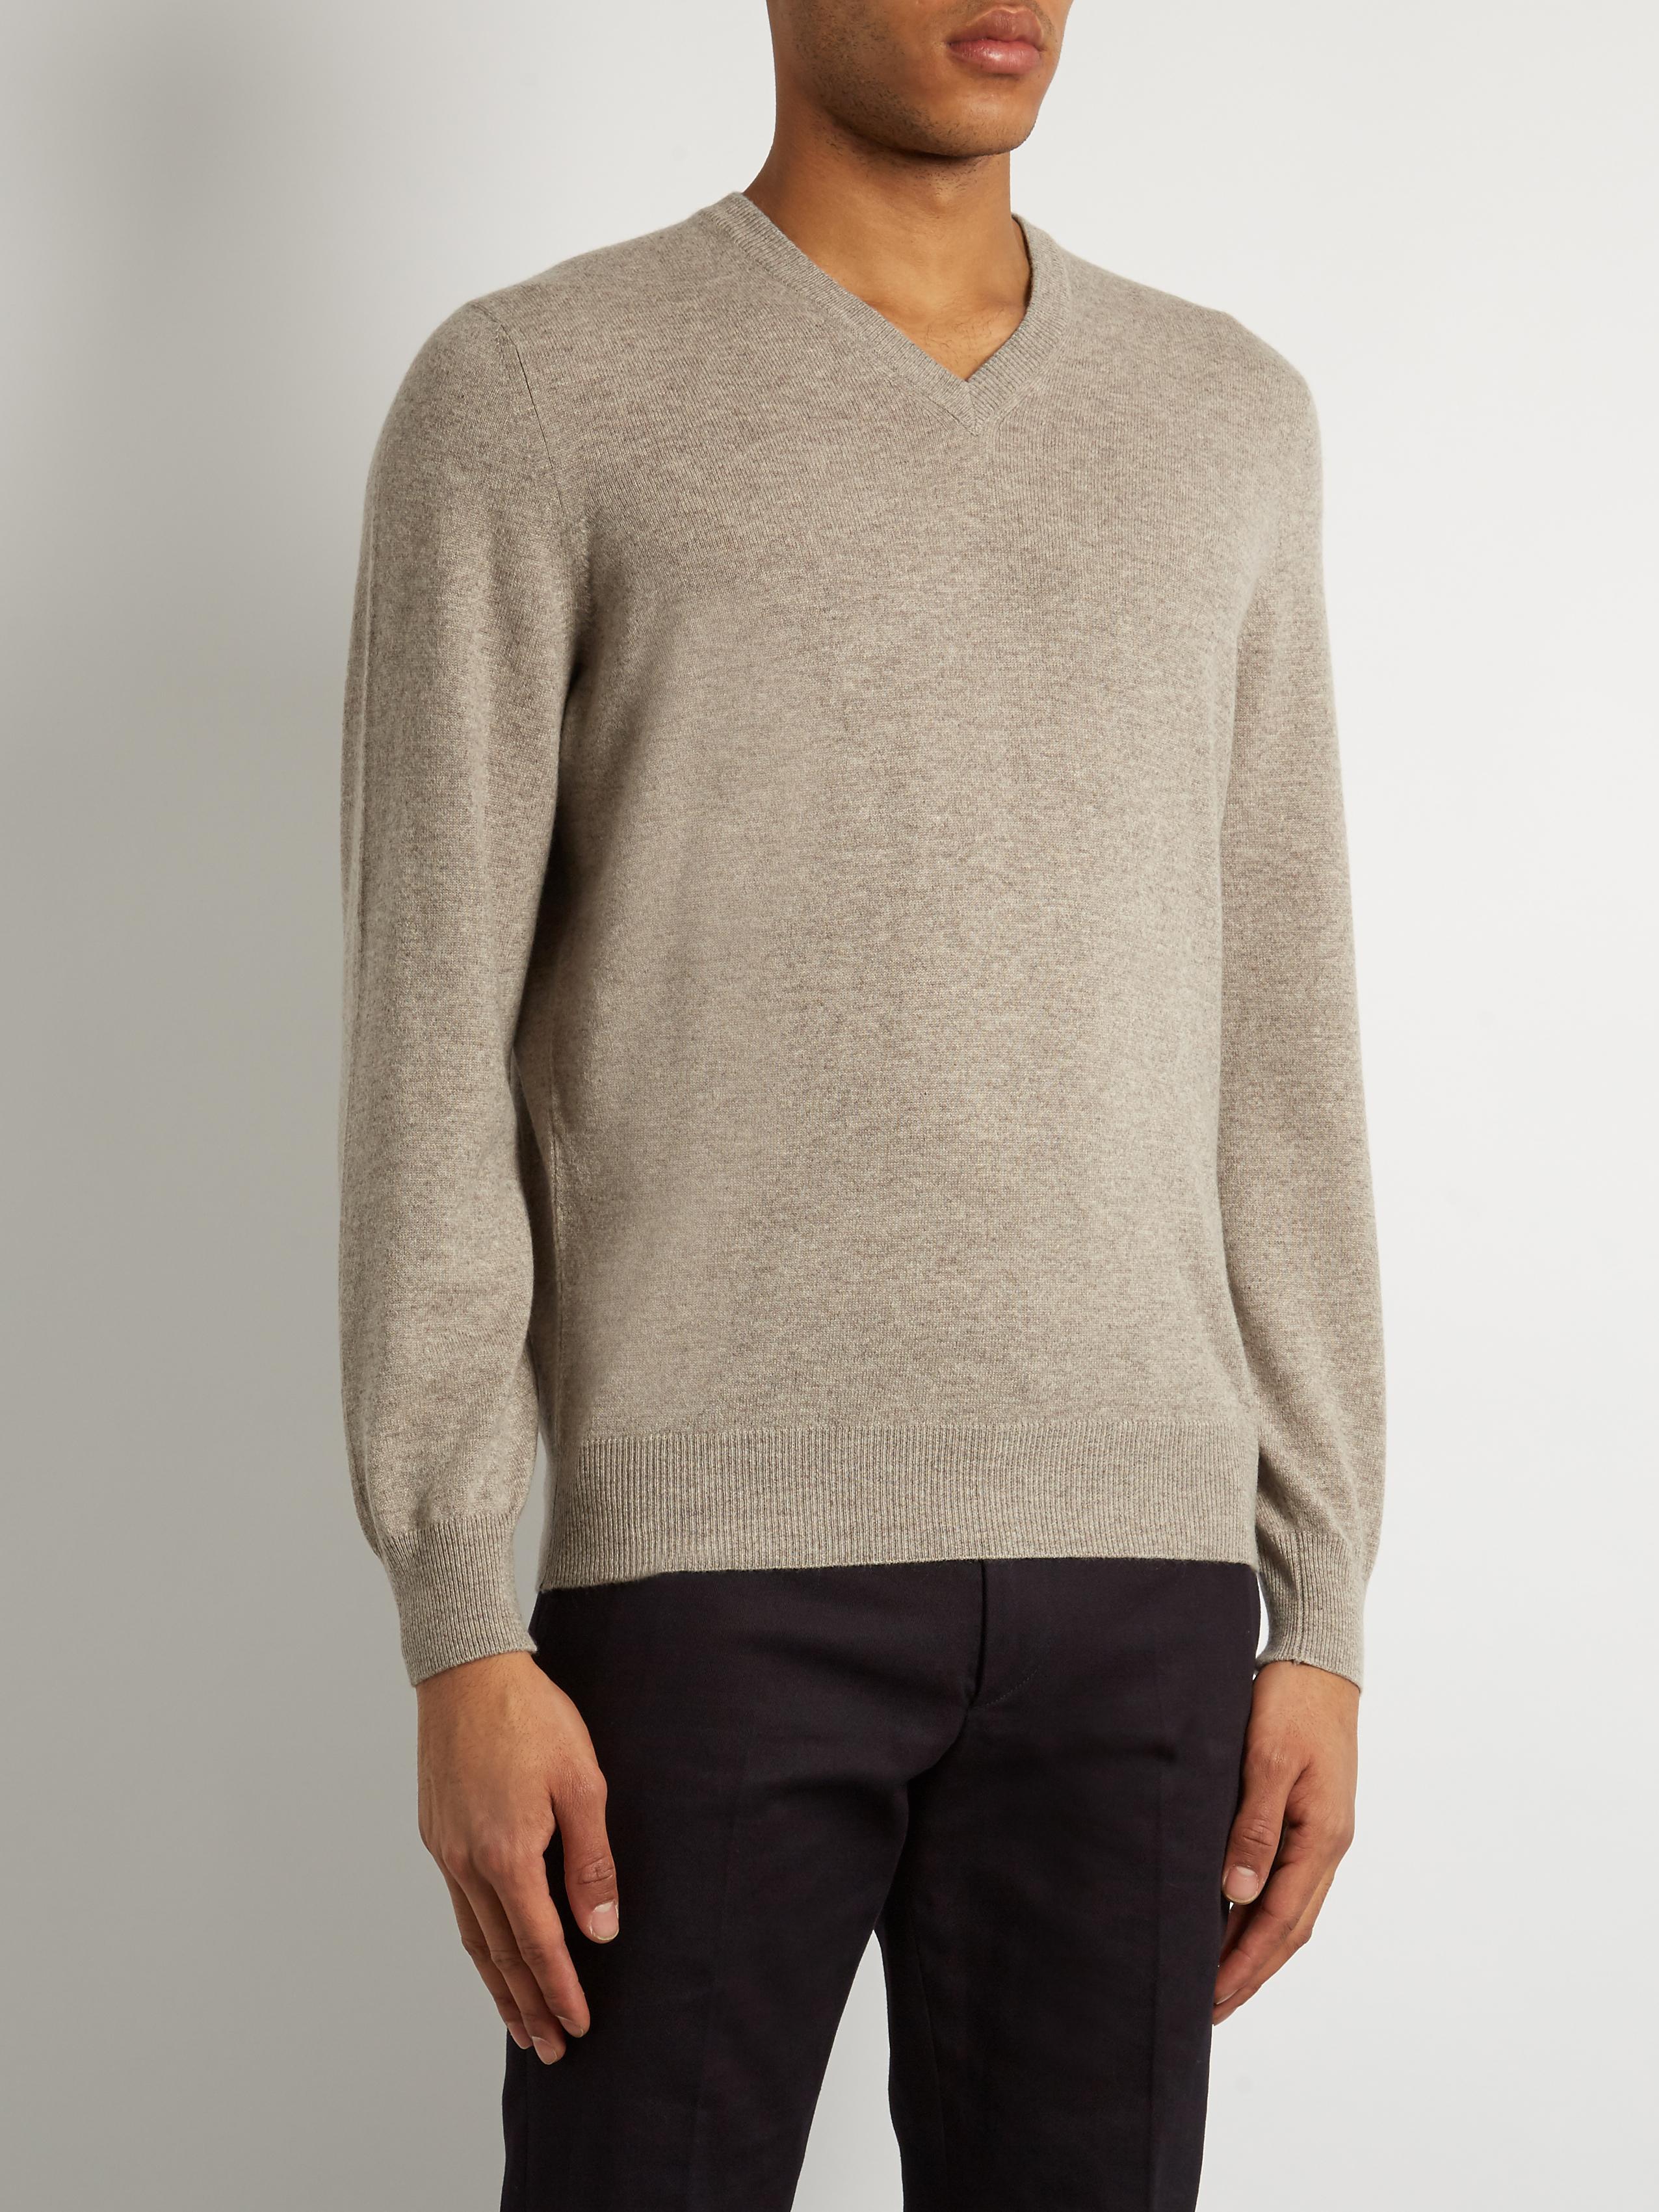 Lyst - Brunello Cucinelli V-neck Cashmere-blend Sweater in Gray for Men